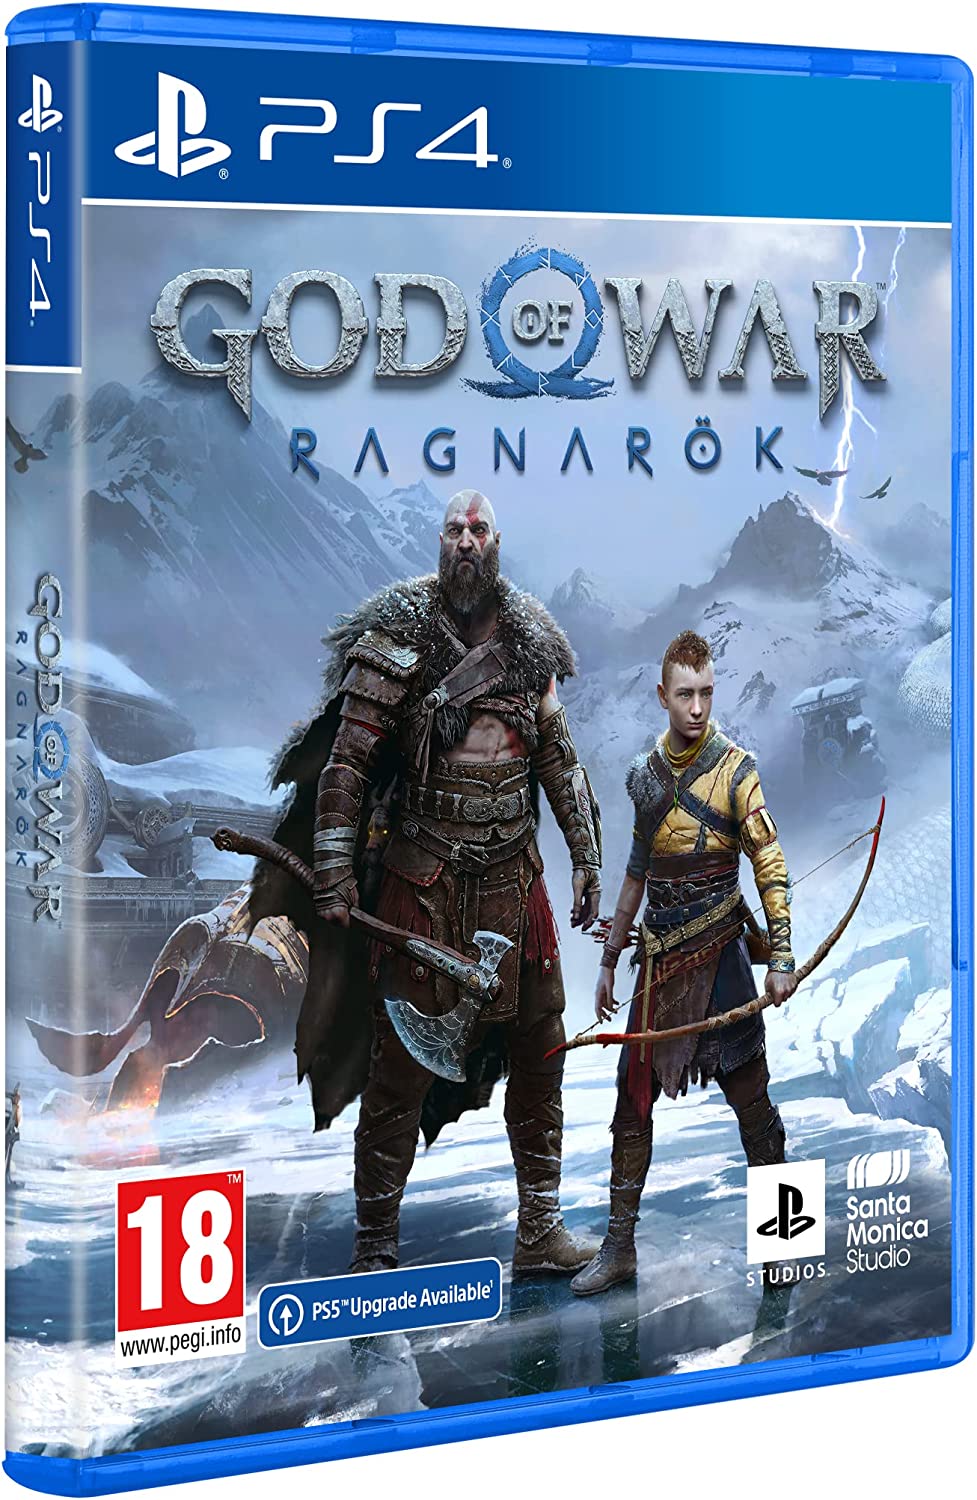 PS5 Version Is Just Enhancement: God of War Ragnarök Was Made for PS4